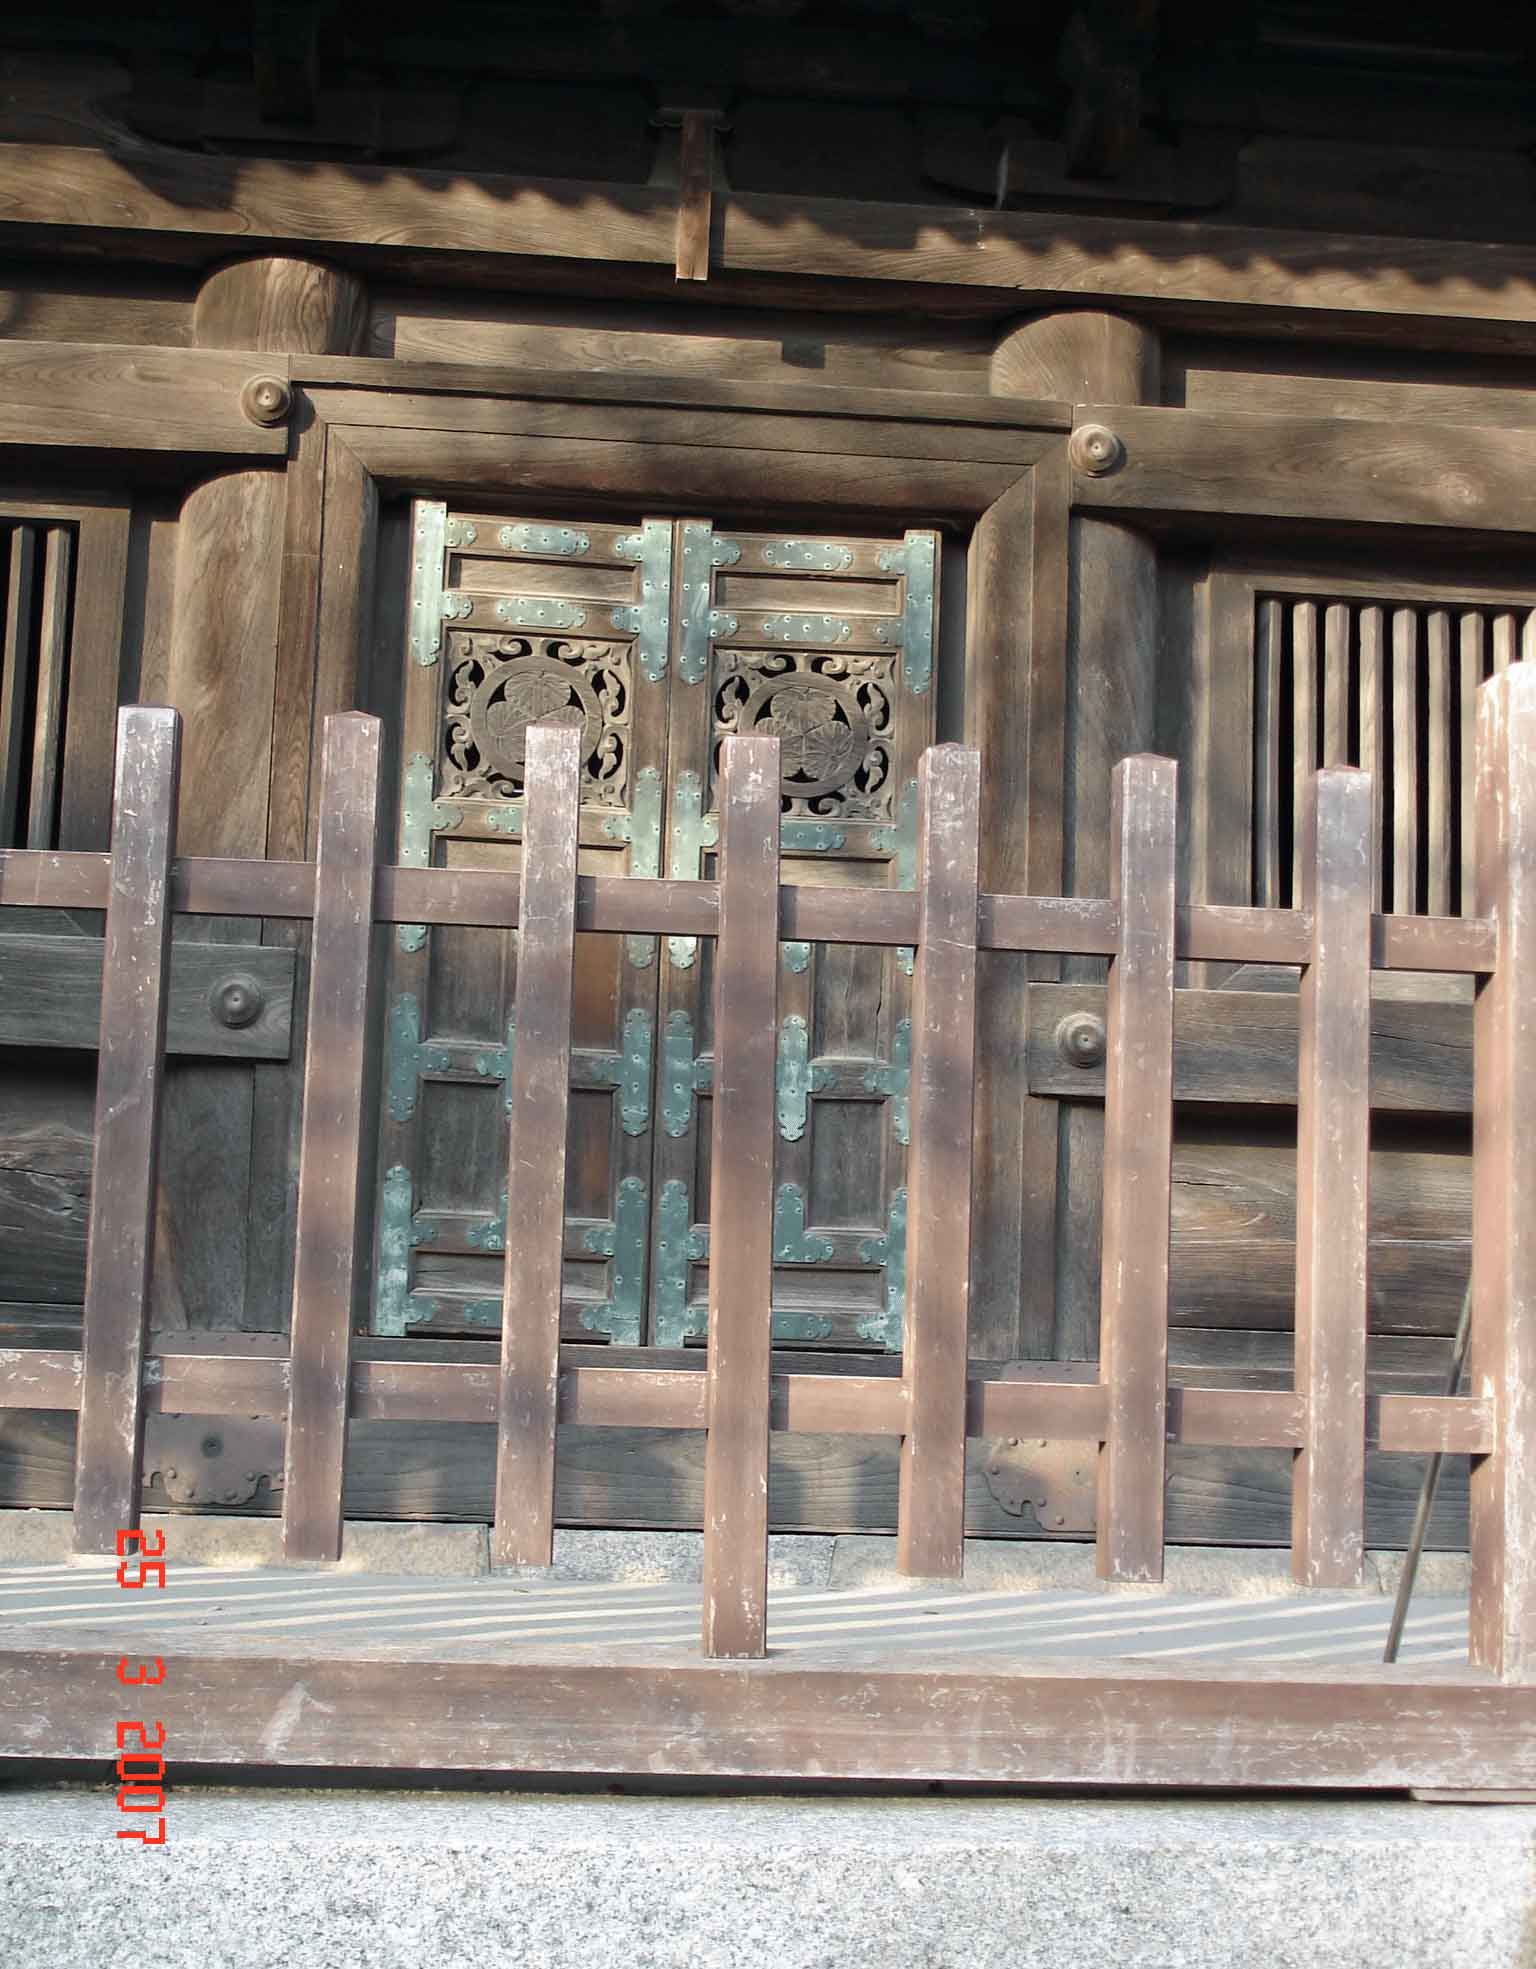 Kosho-ji-Pagoda-carved entrance door- weathered wood of centuries